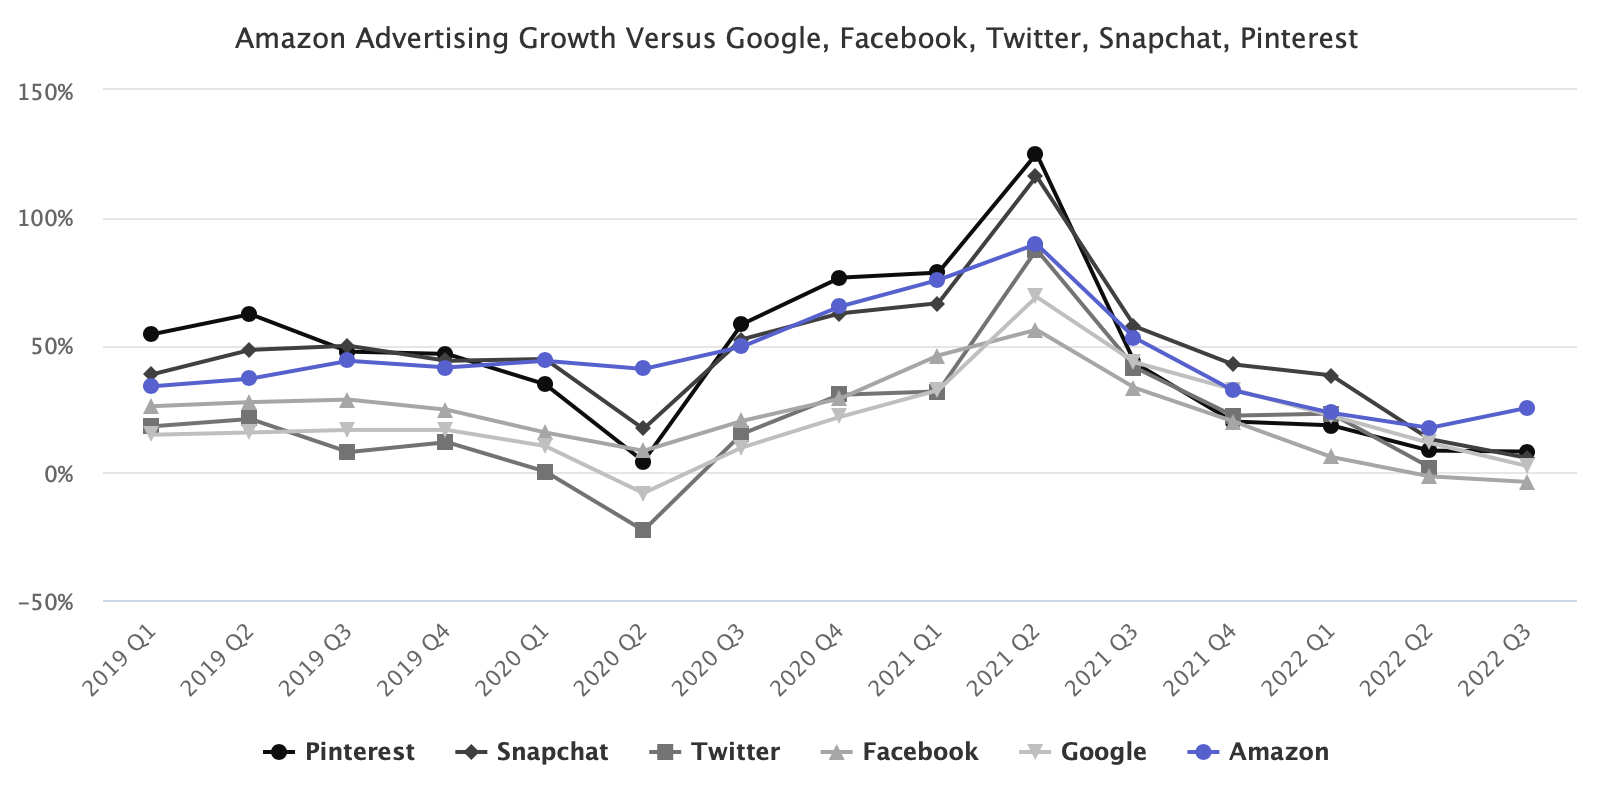 Amazon Advertising Growth Versus Google, Facebook, Twitter, Snapchat, Pinterest